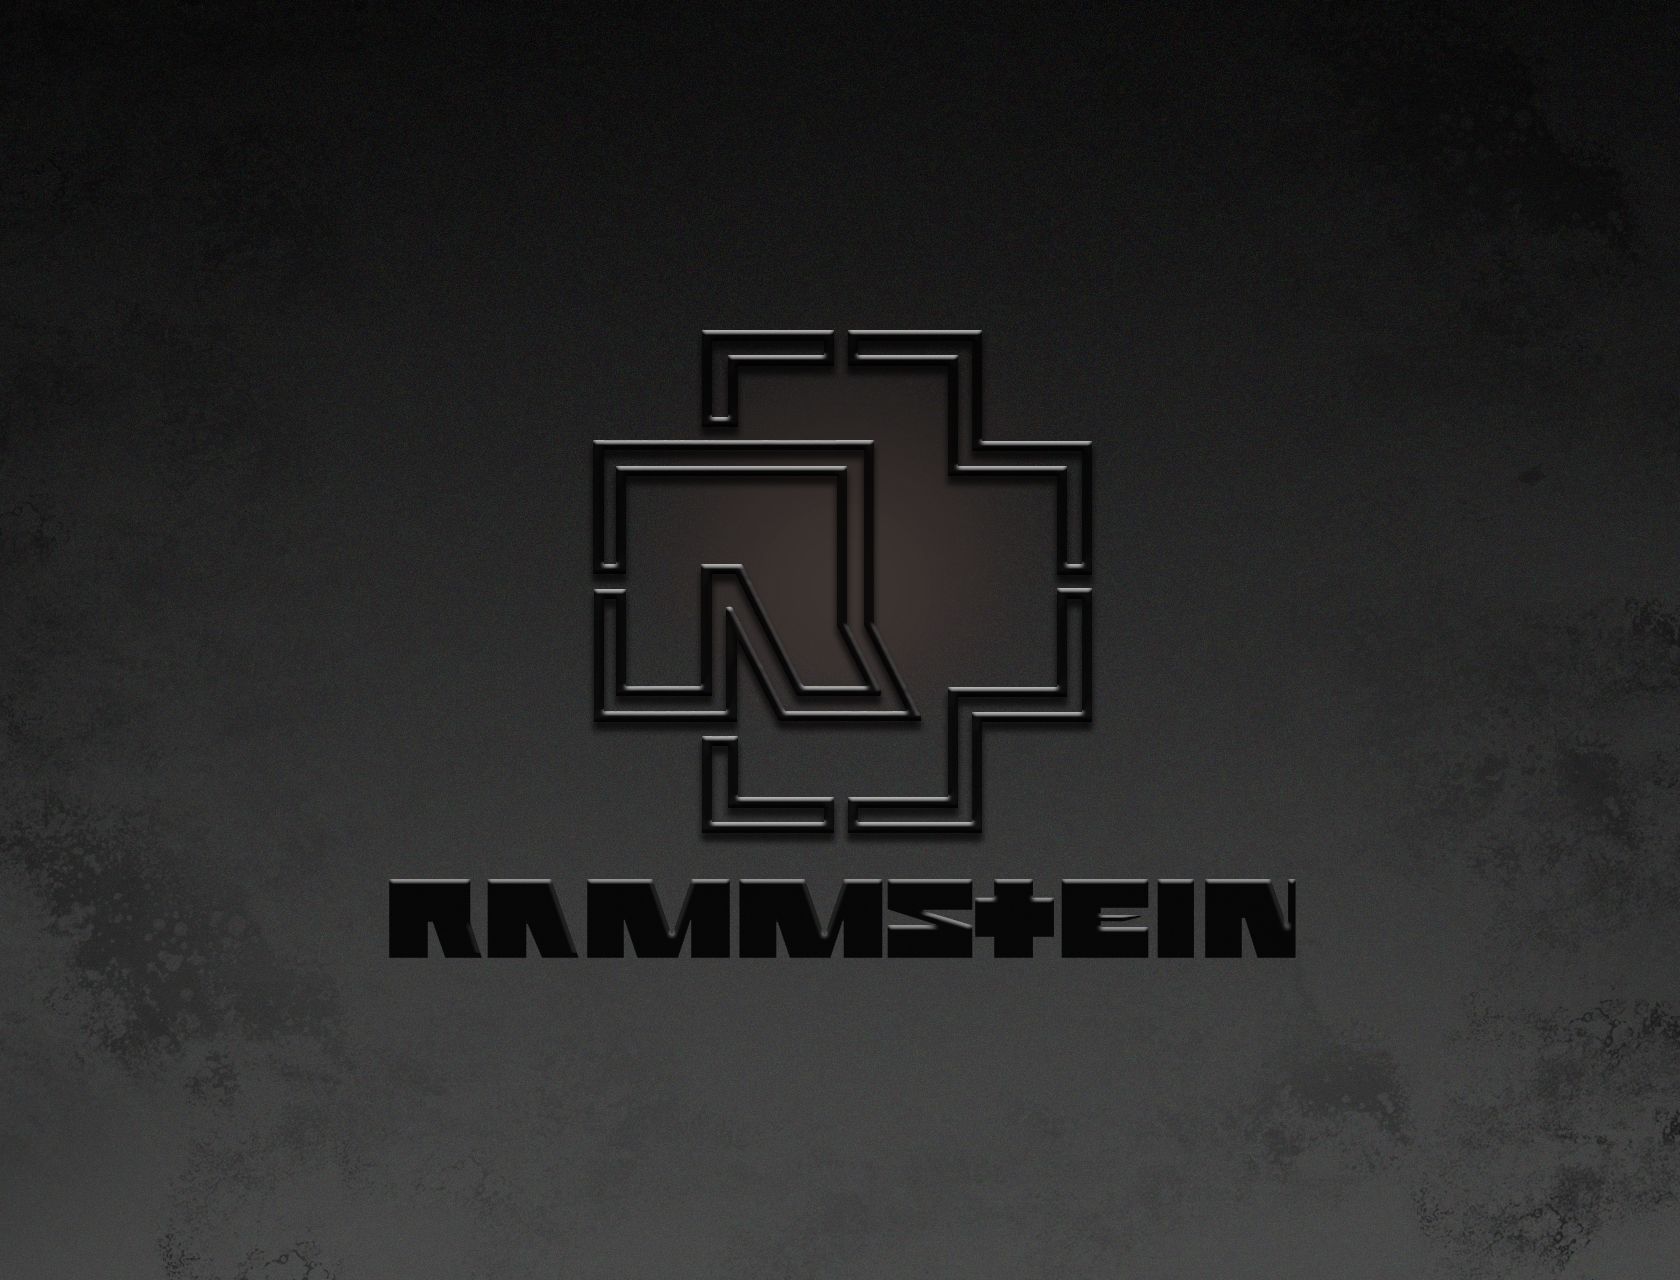 Fondos de pantalla de Rammstein - FondosMil